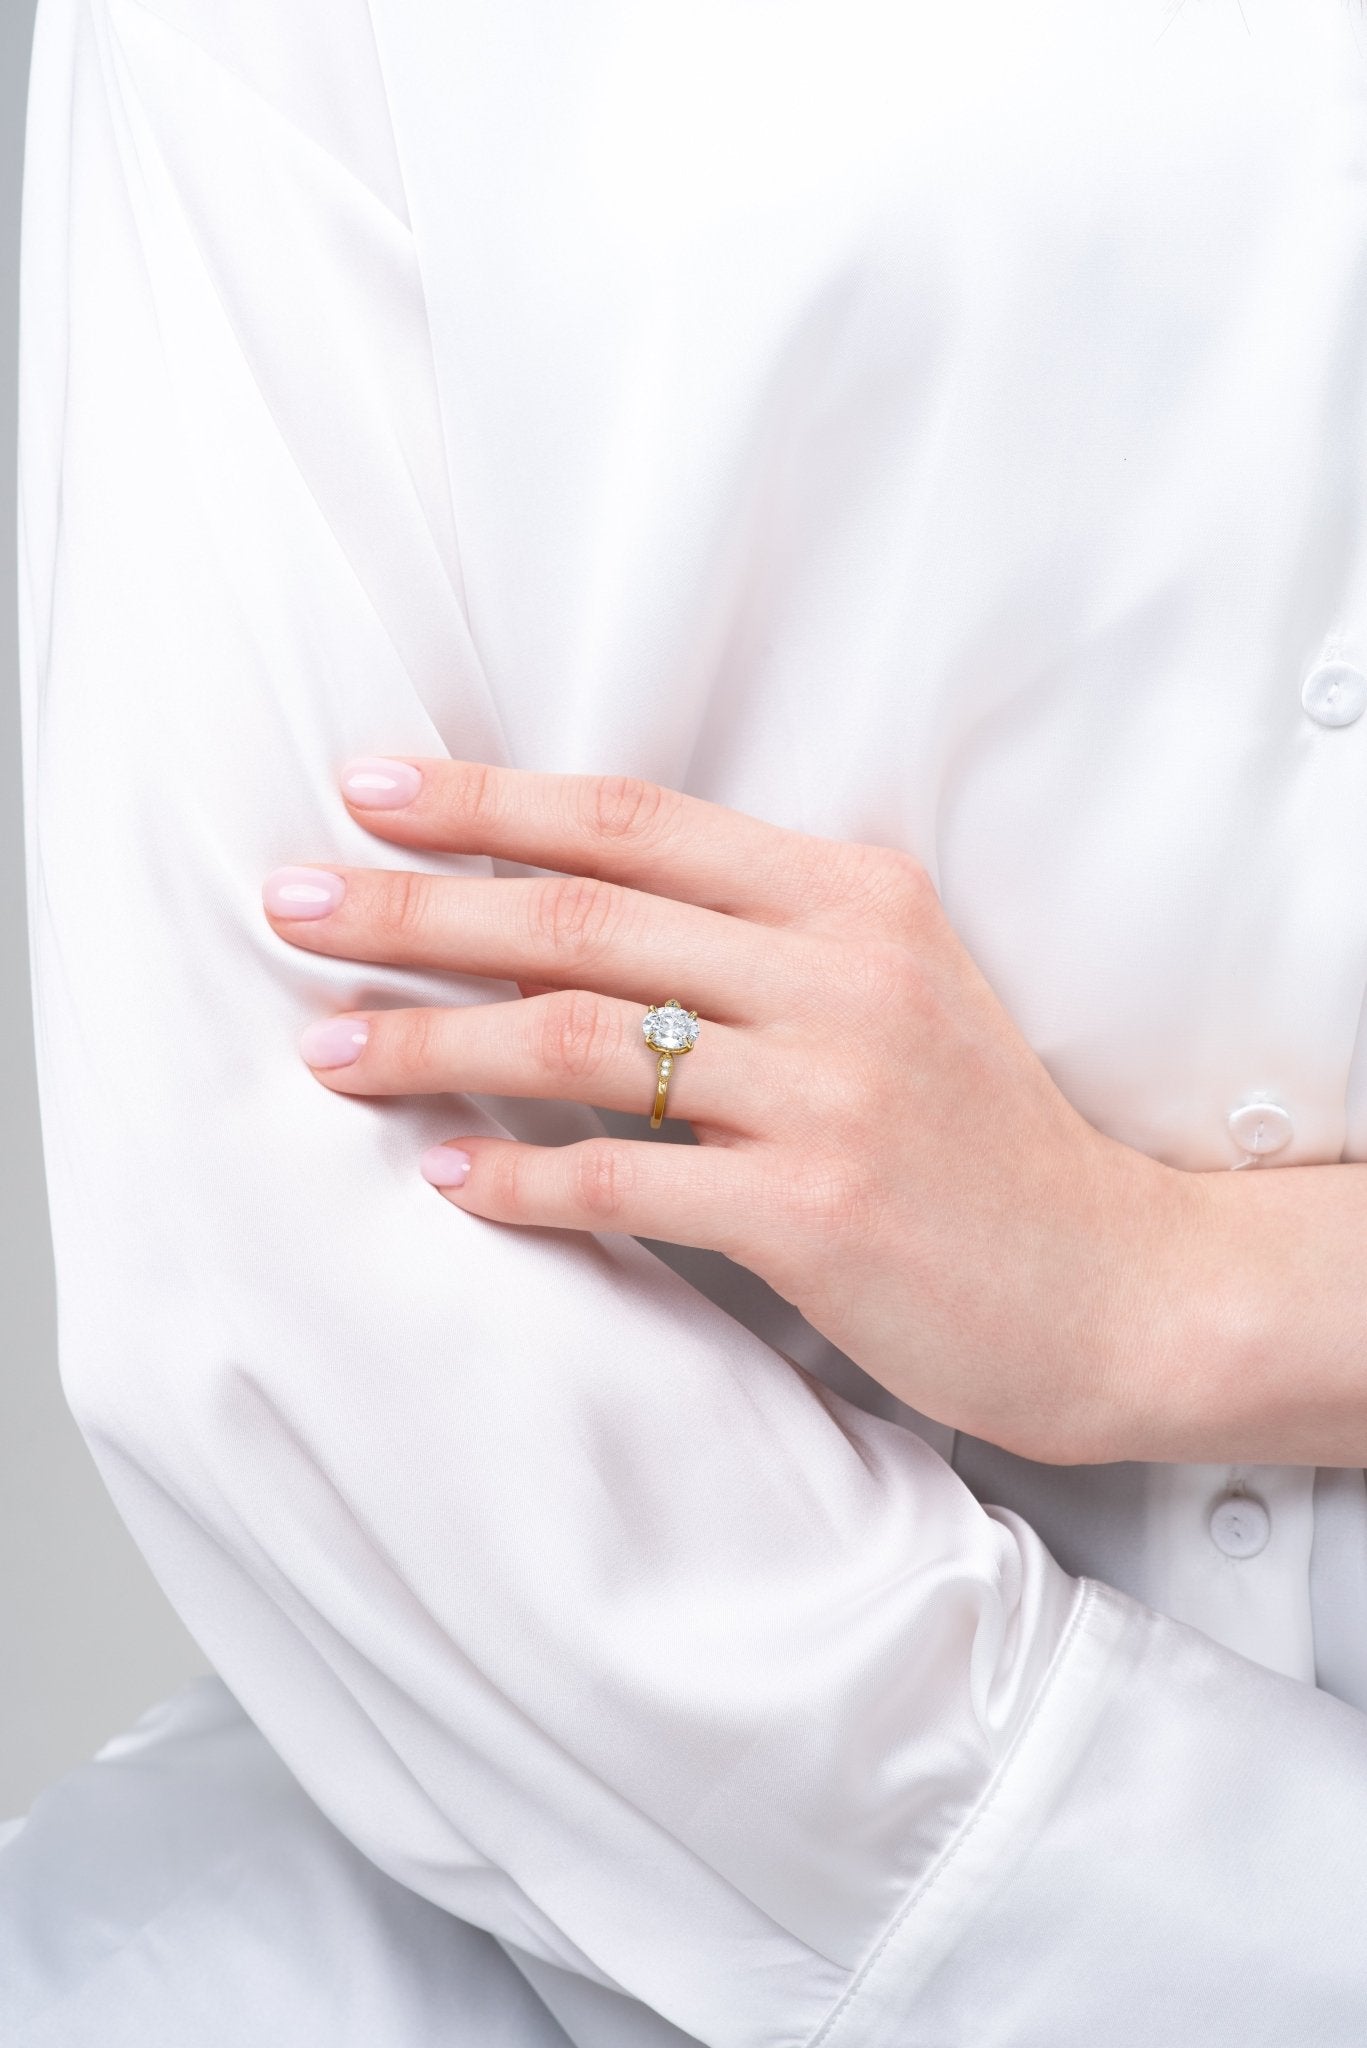 Oval Cut Diamond Engagement Ring - The Harmony RingLVII Fine Jewelry